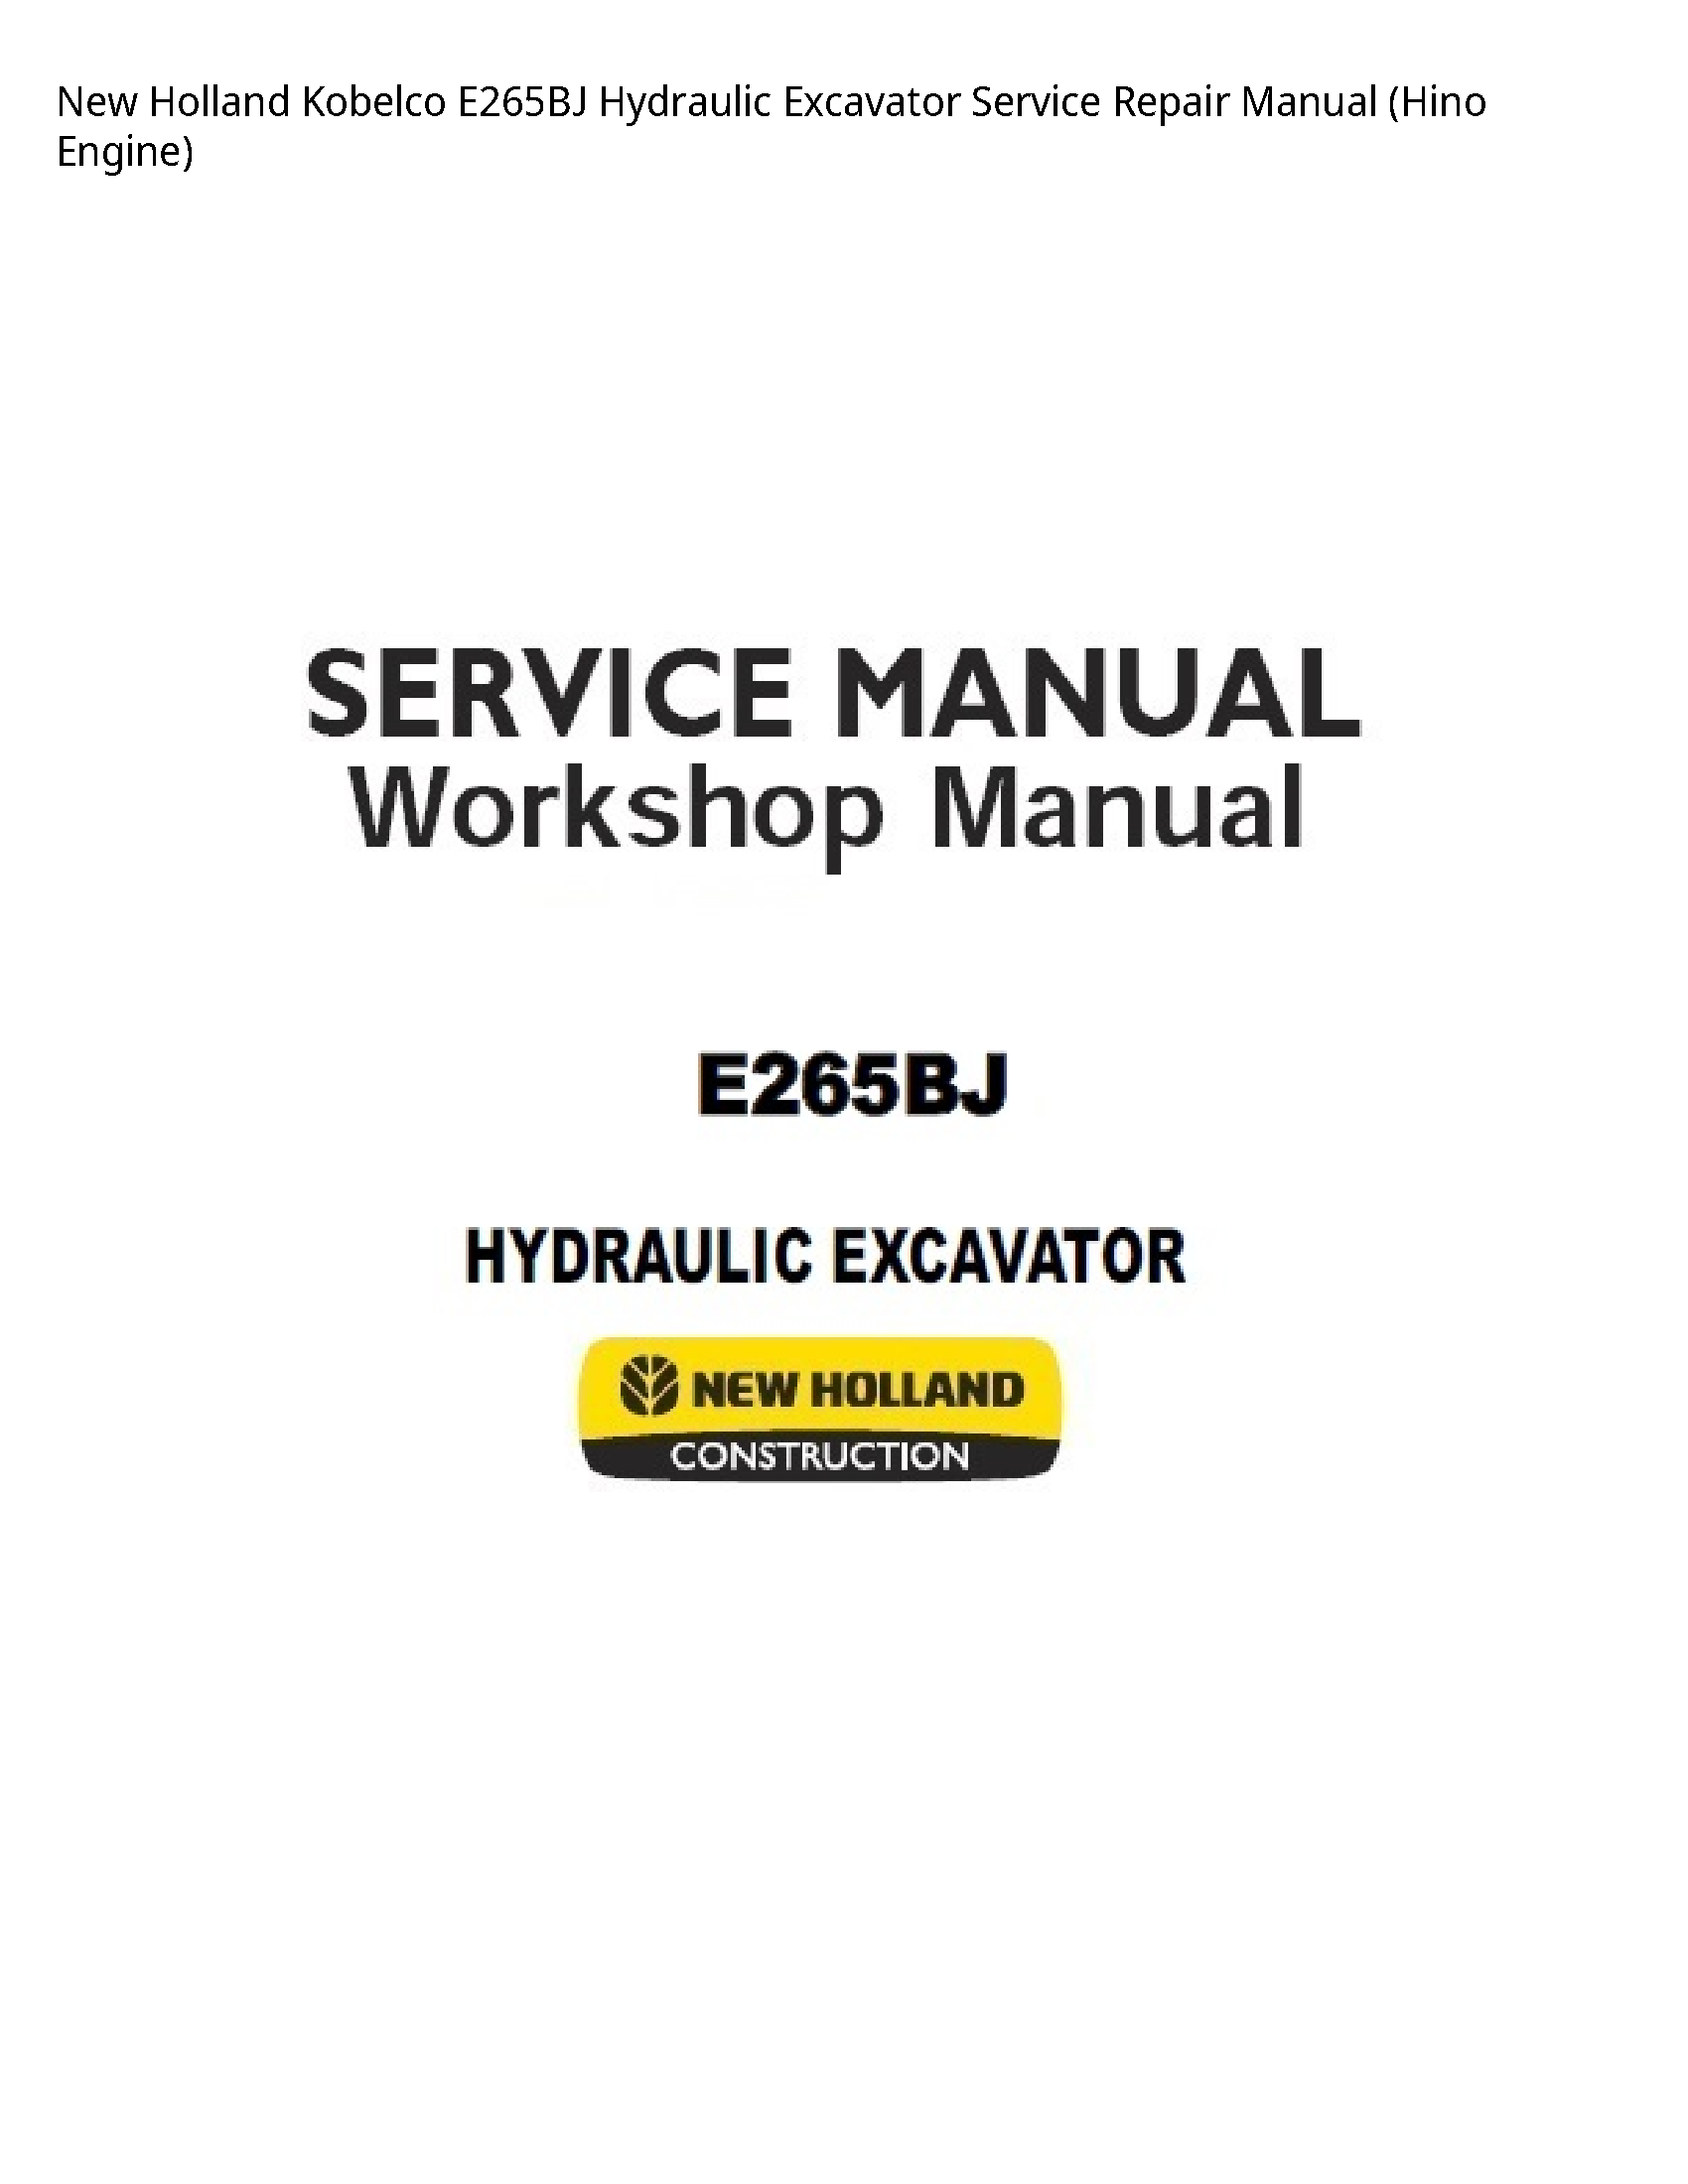 New Holland E265BJ Kobelco Hydraulic Excavator manual